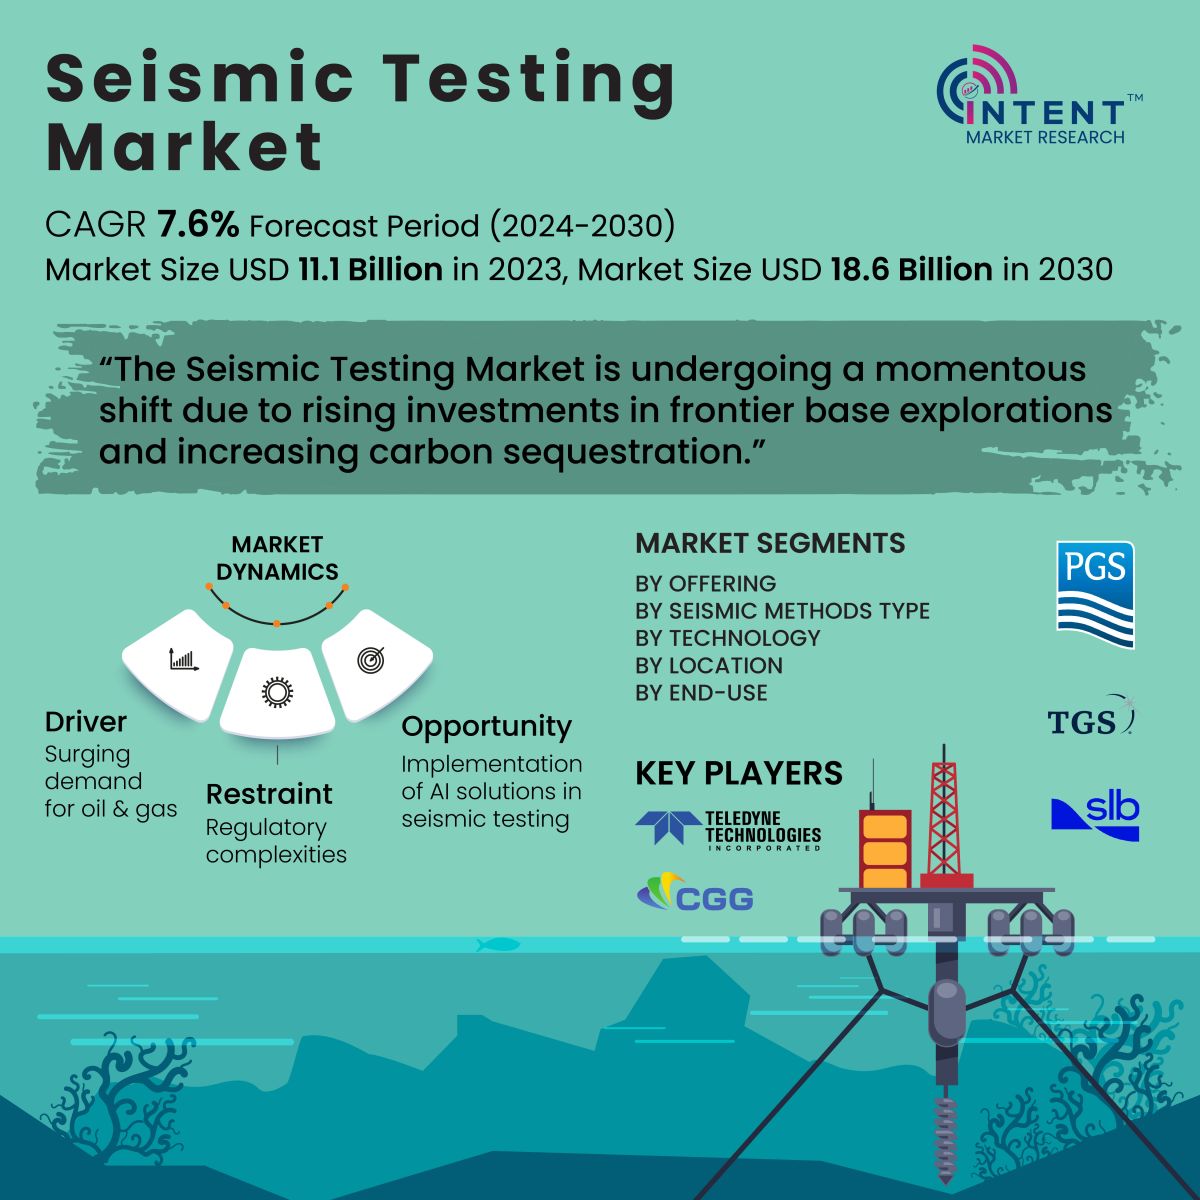 Seismic Testing Market Infoghraphics